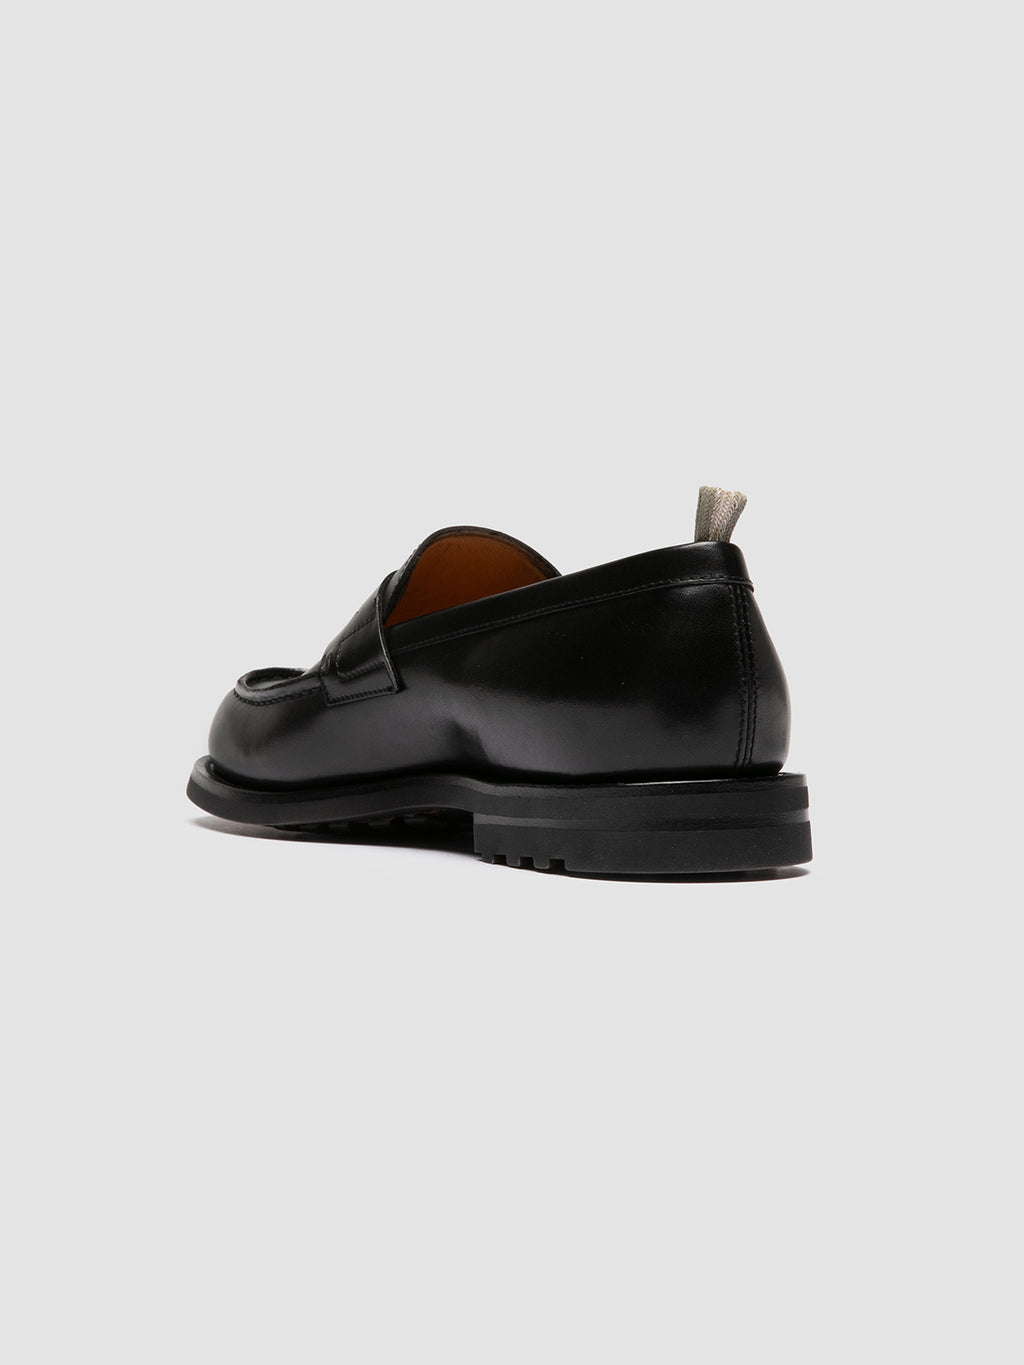 BELMONDO 006 - Black Leather Penny Loafers